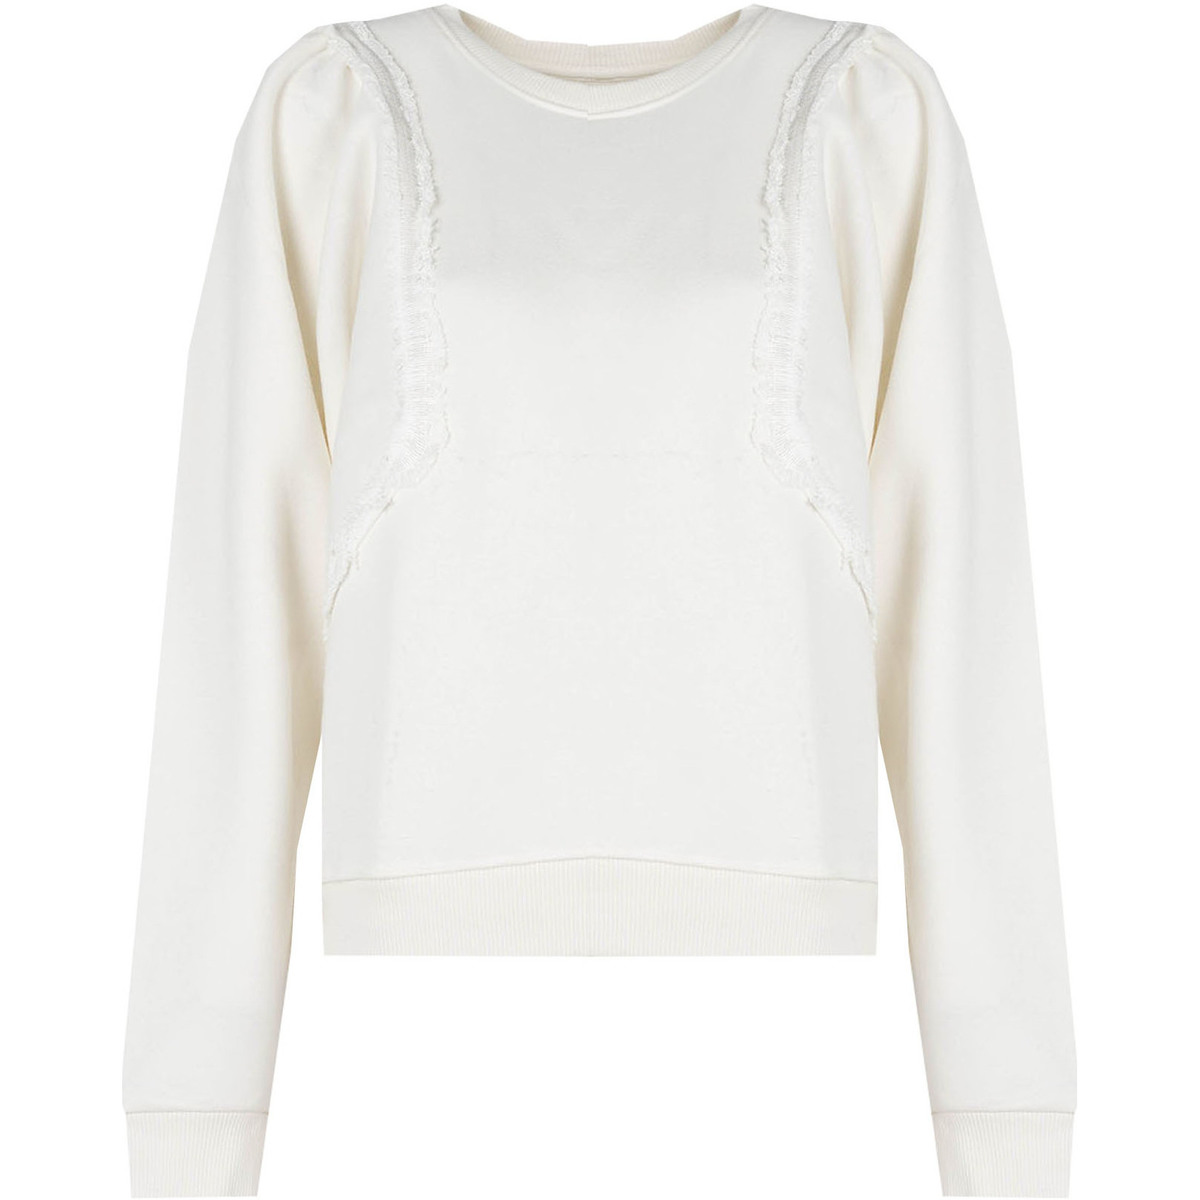 Textiel Dames Sweaters / Sweatshirts Pepe jeans PL581254 | Esther Beige